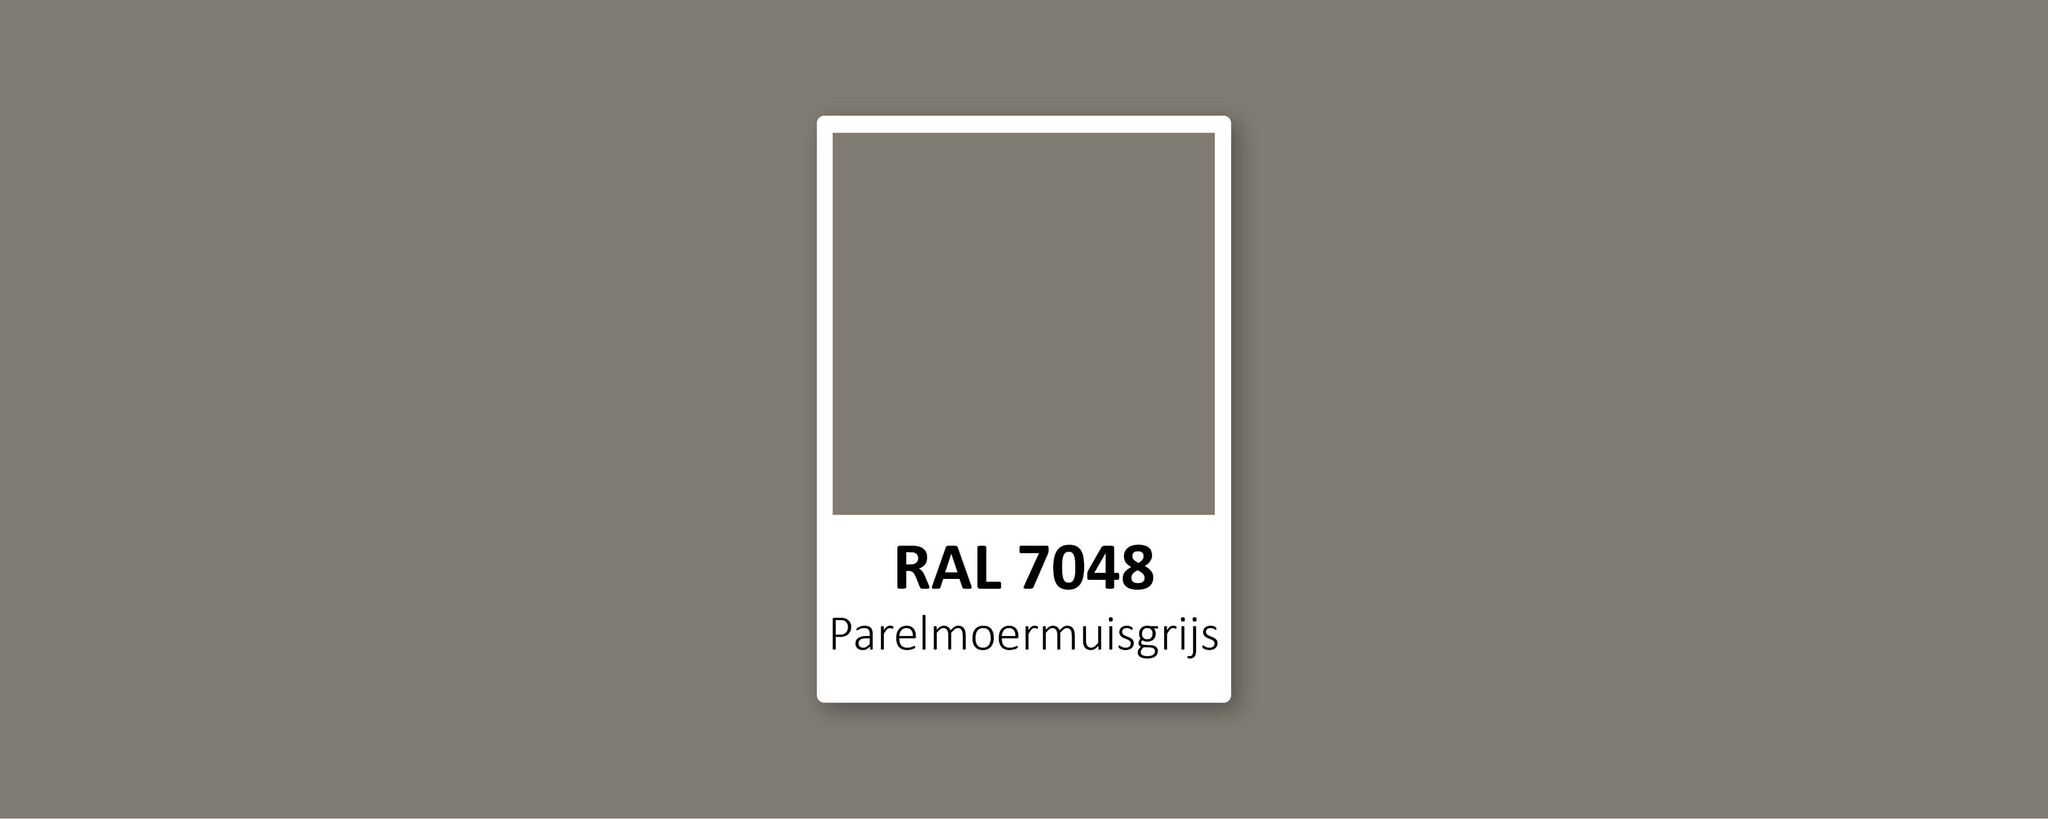 RAL 7048: Parelmoer muisgrijs - De Verfzaak